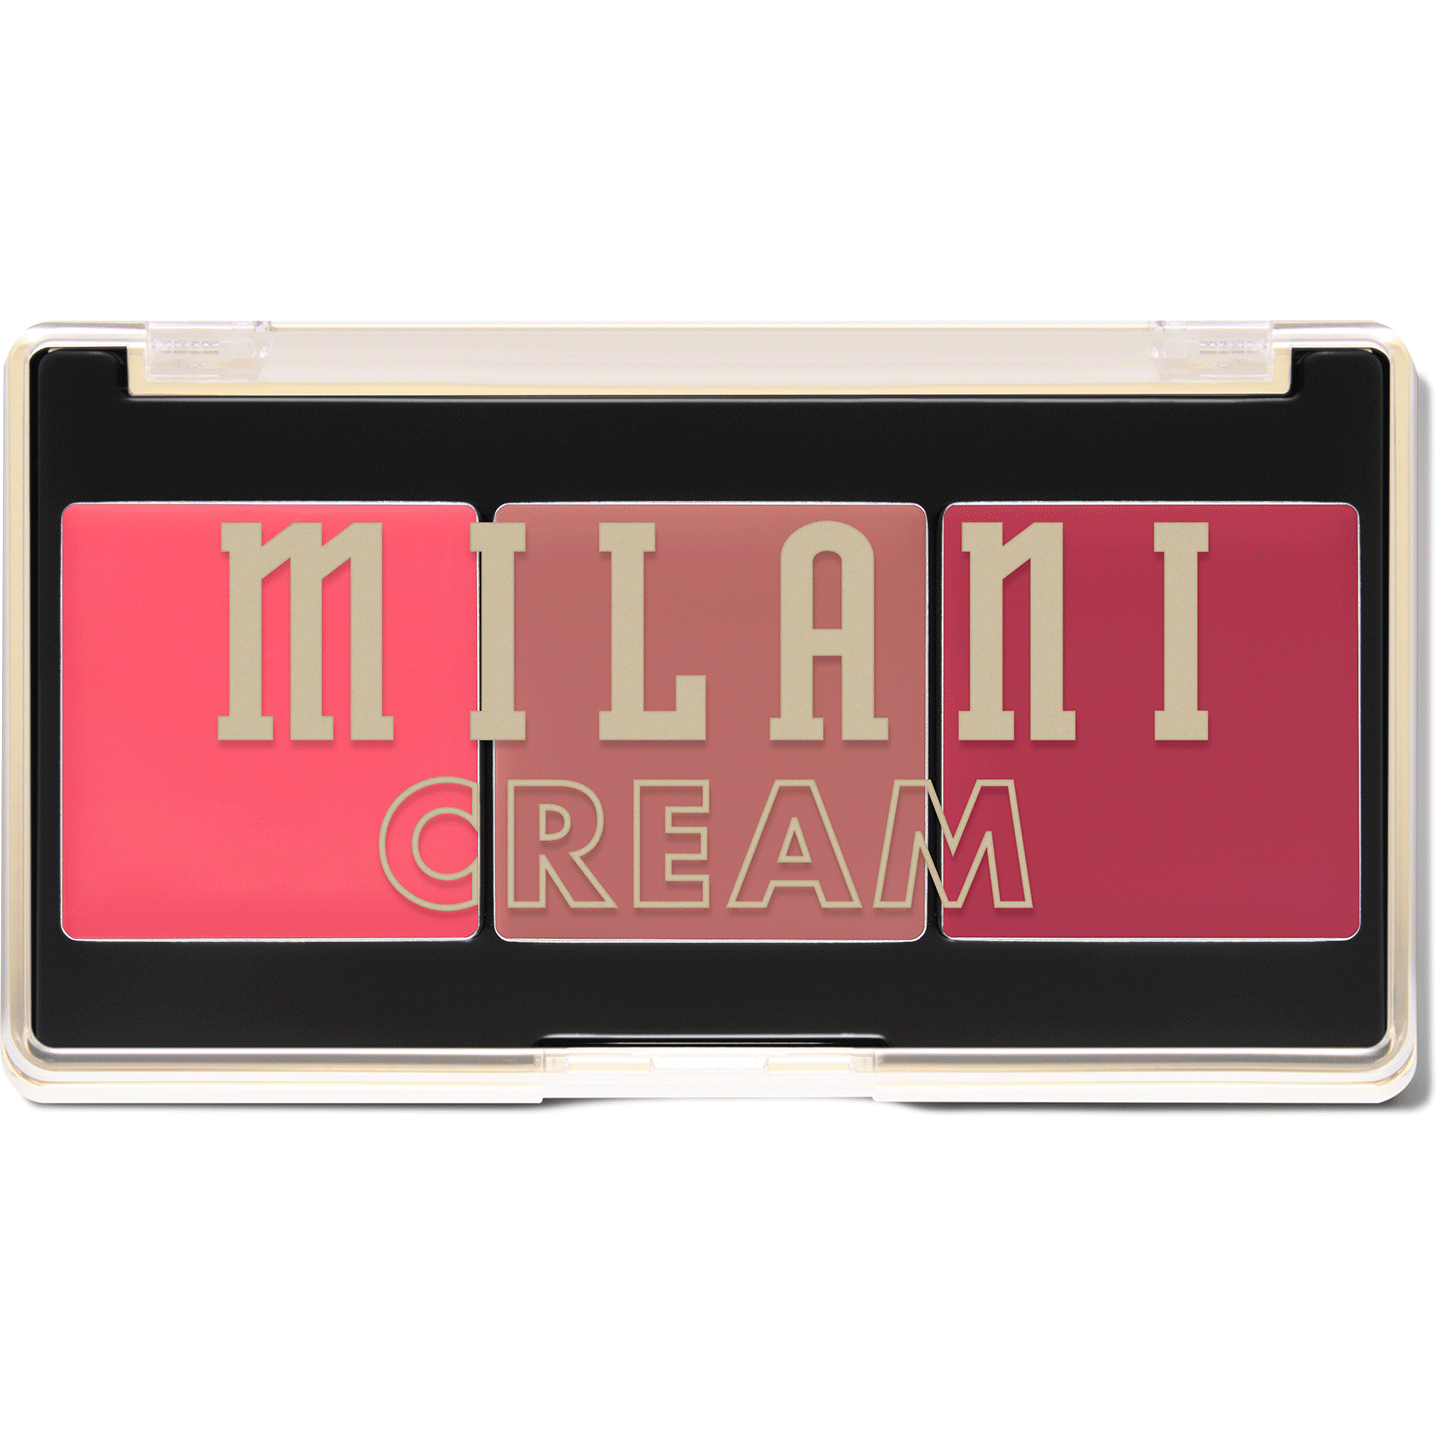 Milani Cheek Kiss Cream Blush Palette